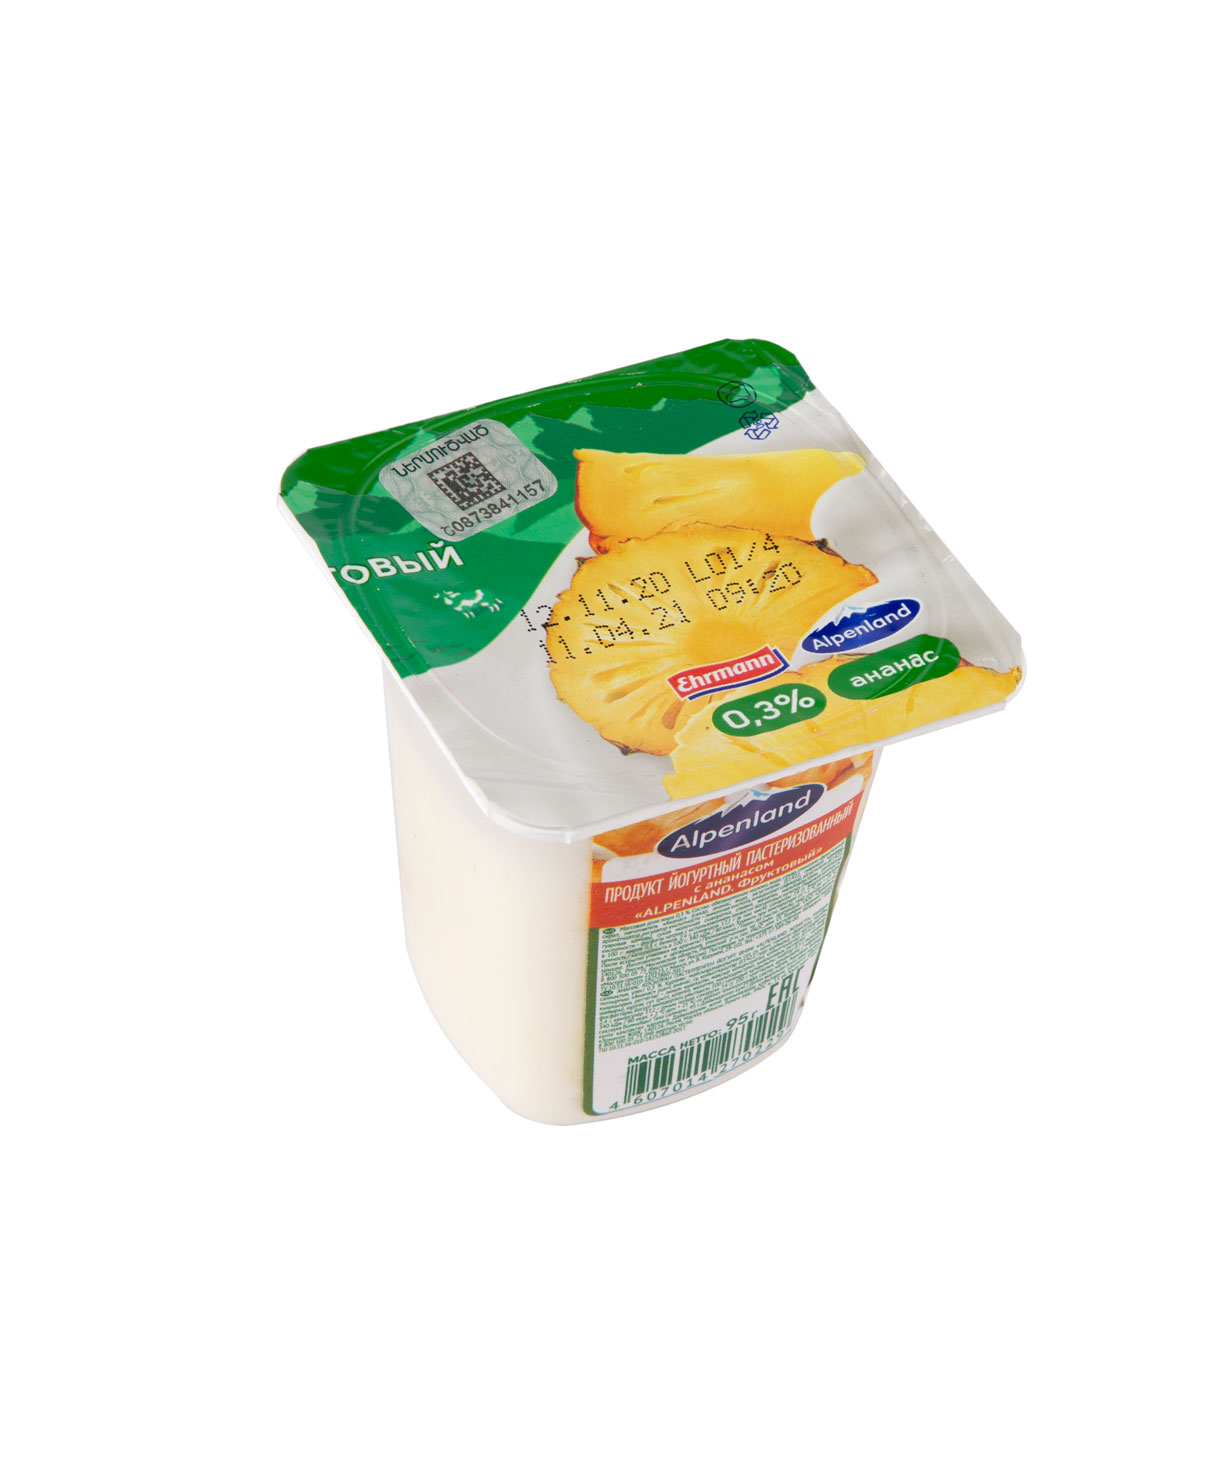 Yogurt product 